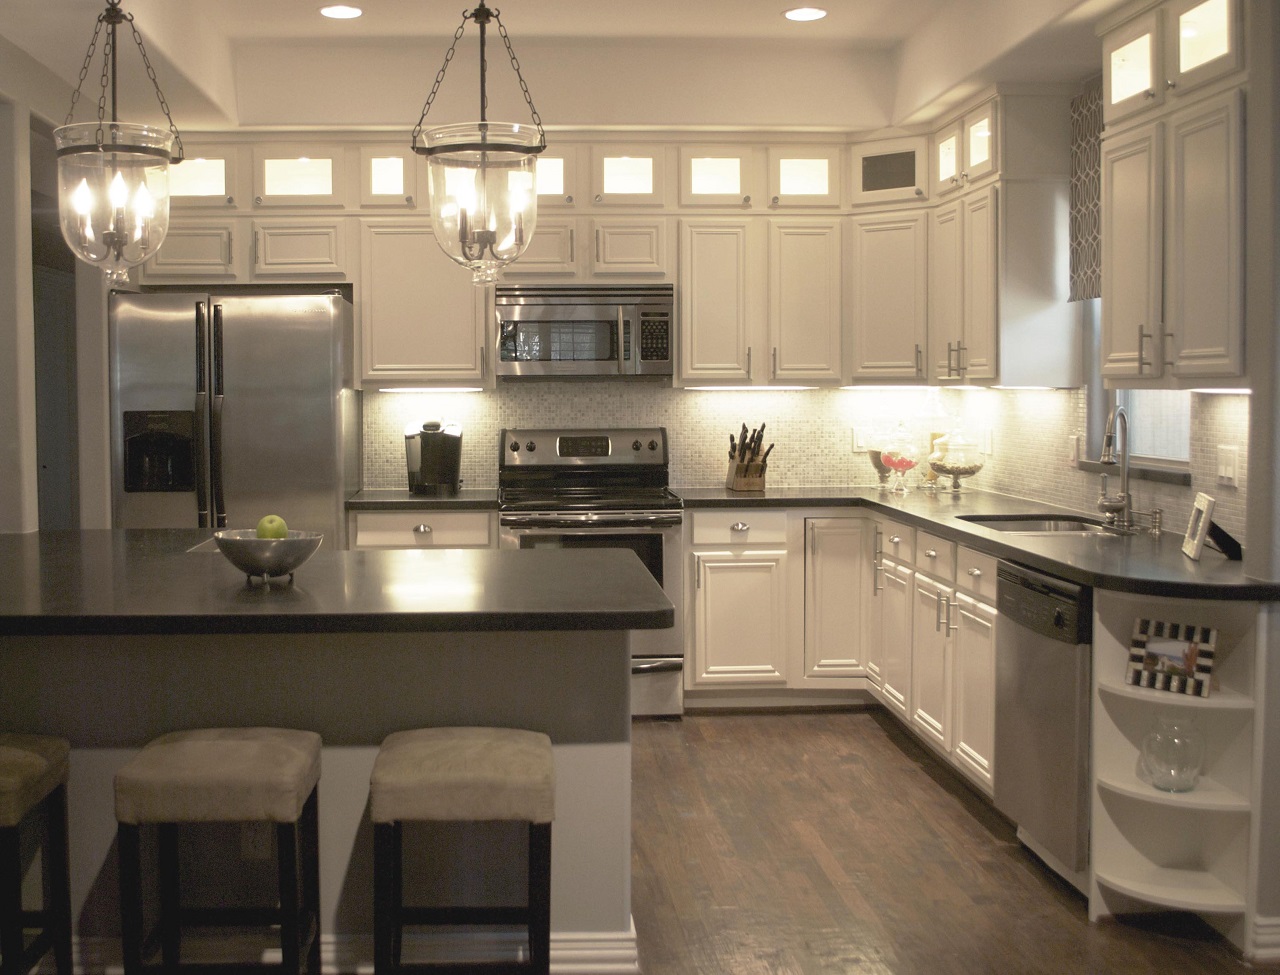 Gorgeous white kitchen with under-cabinet lighting